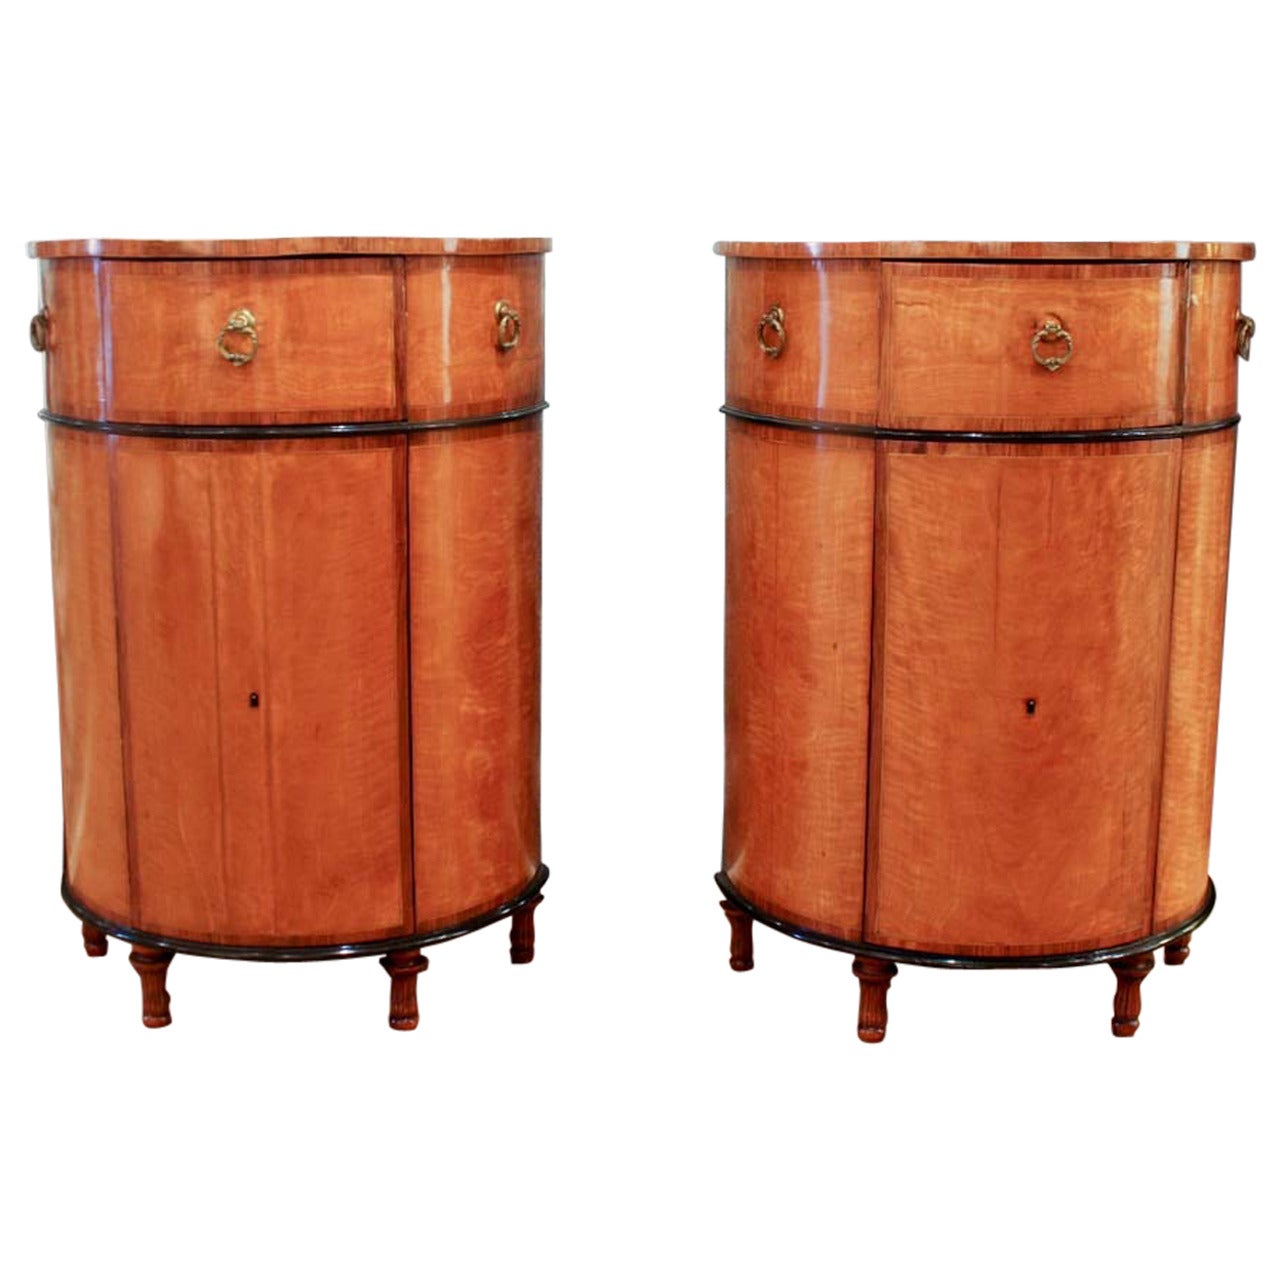 Pair of Sheraton Inlaid Satinwood Demilune Cabinets